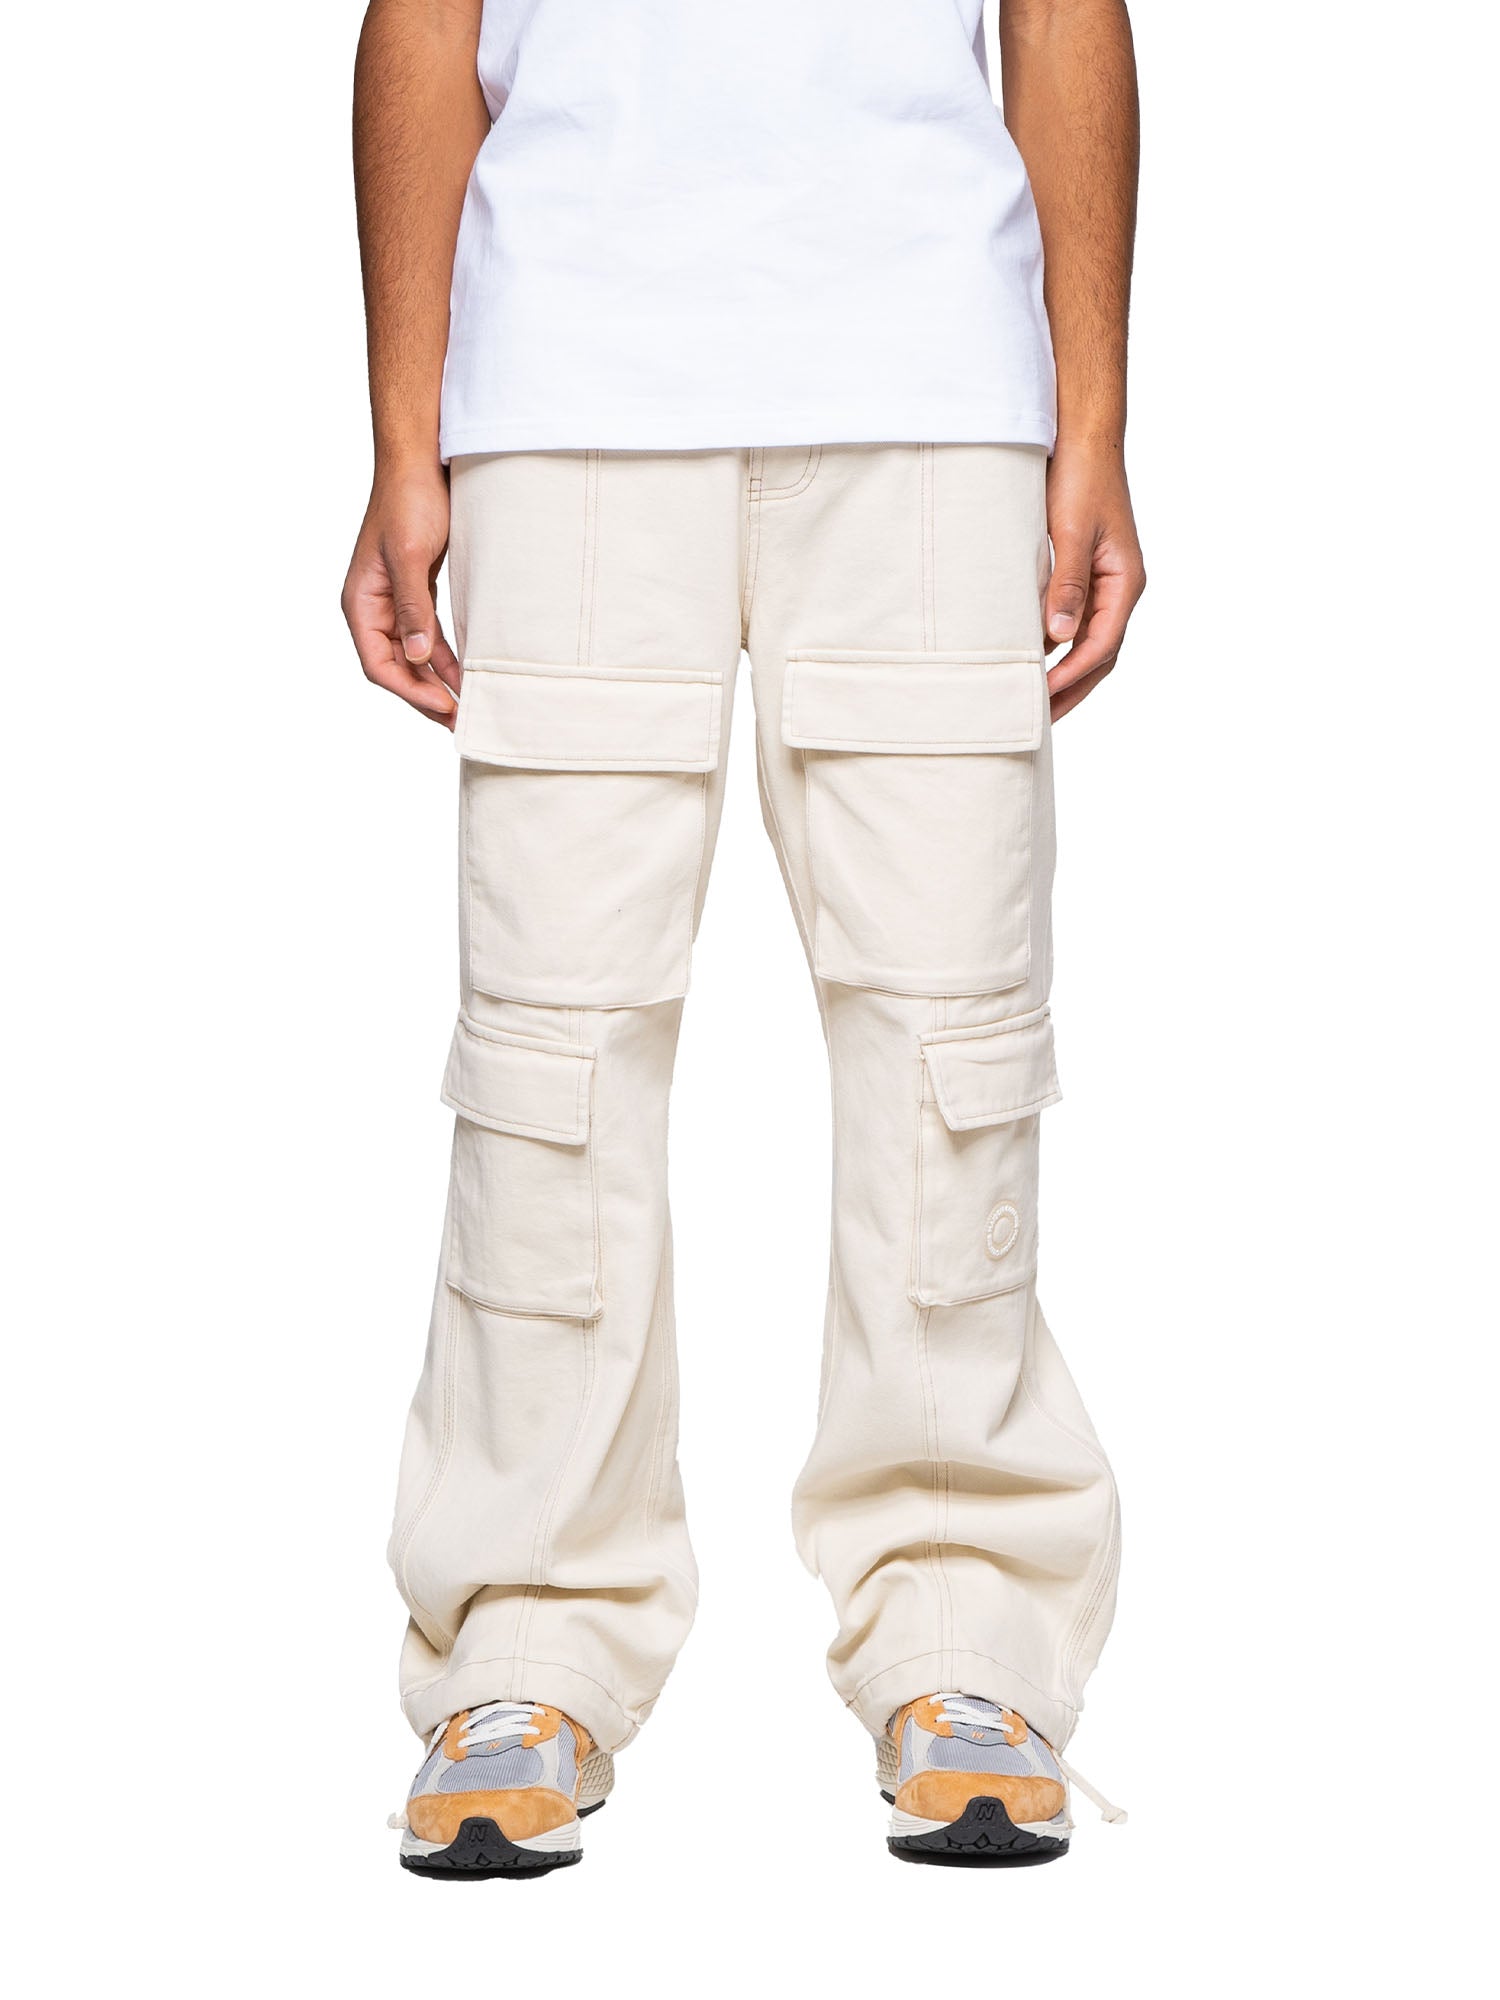 www.haoming.jp - ohotoro cotton cargo pants 価格比較